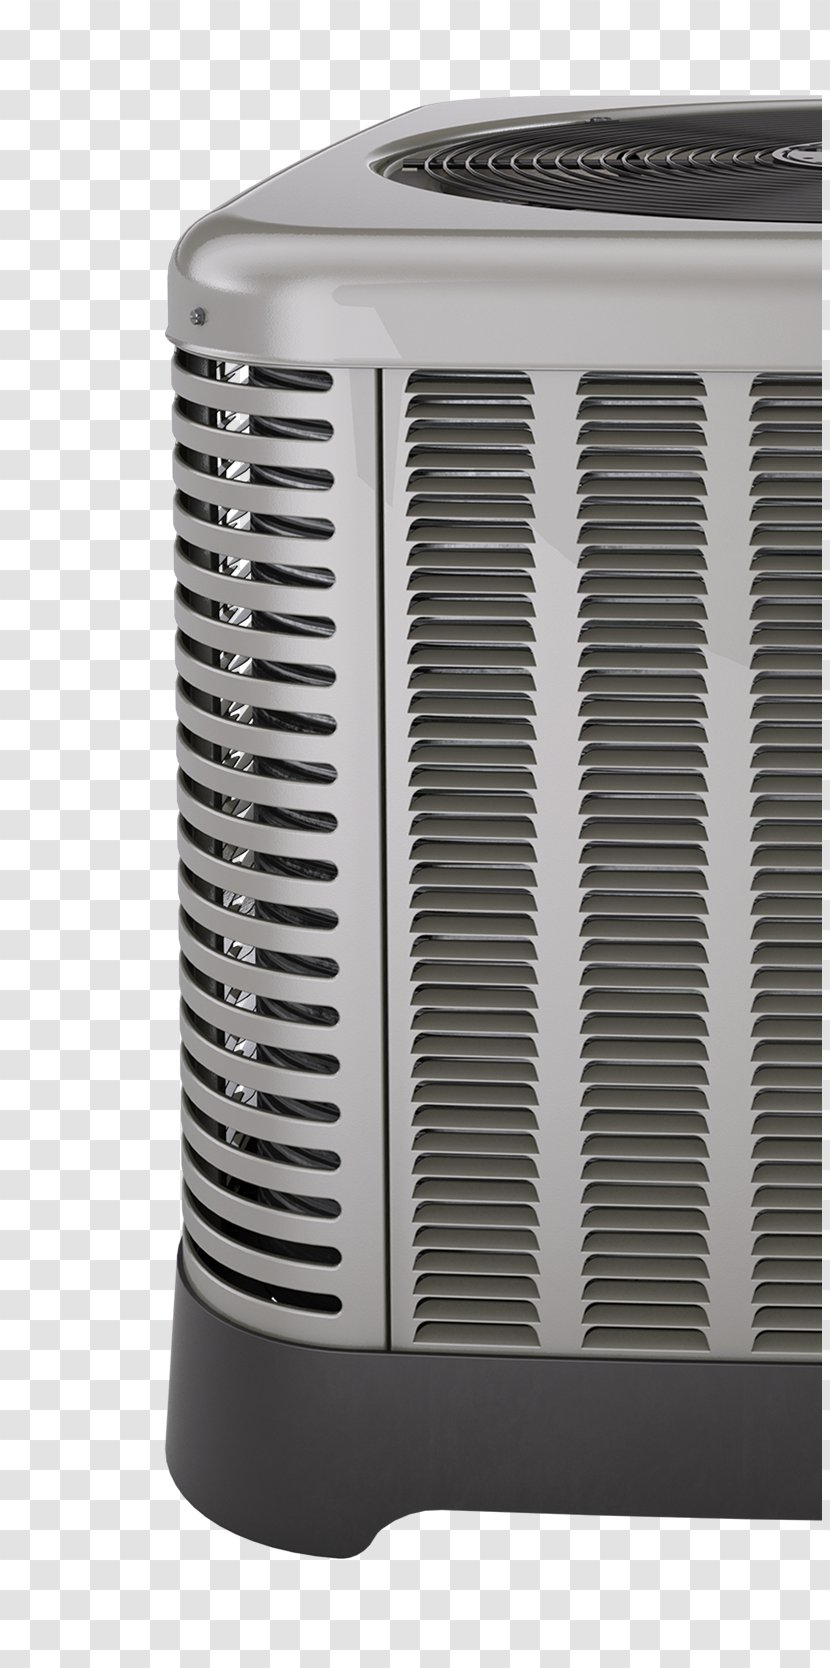 Furnace Seasonal Energy Efficiency Ratio Rheem Heat Pump Condenser - Ton - Air Conditioning Technician Transparent PNG